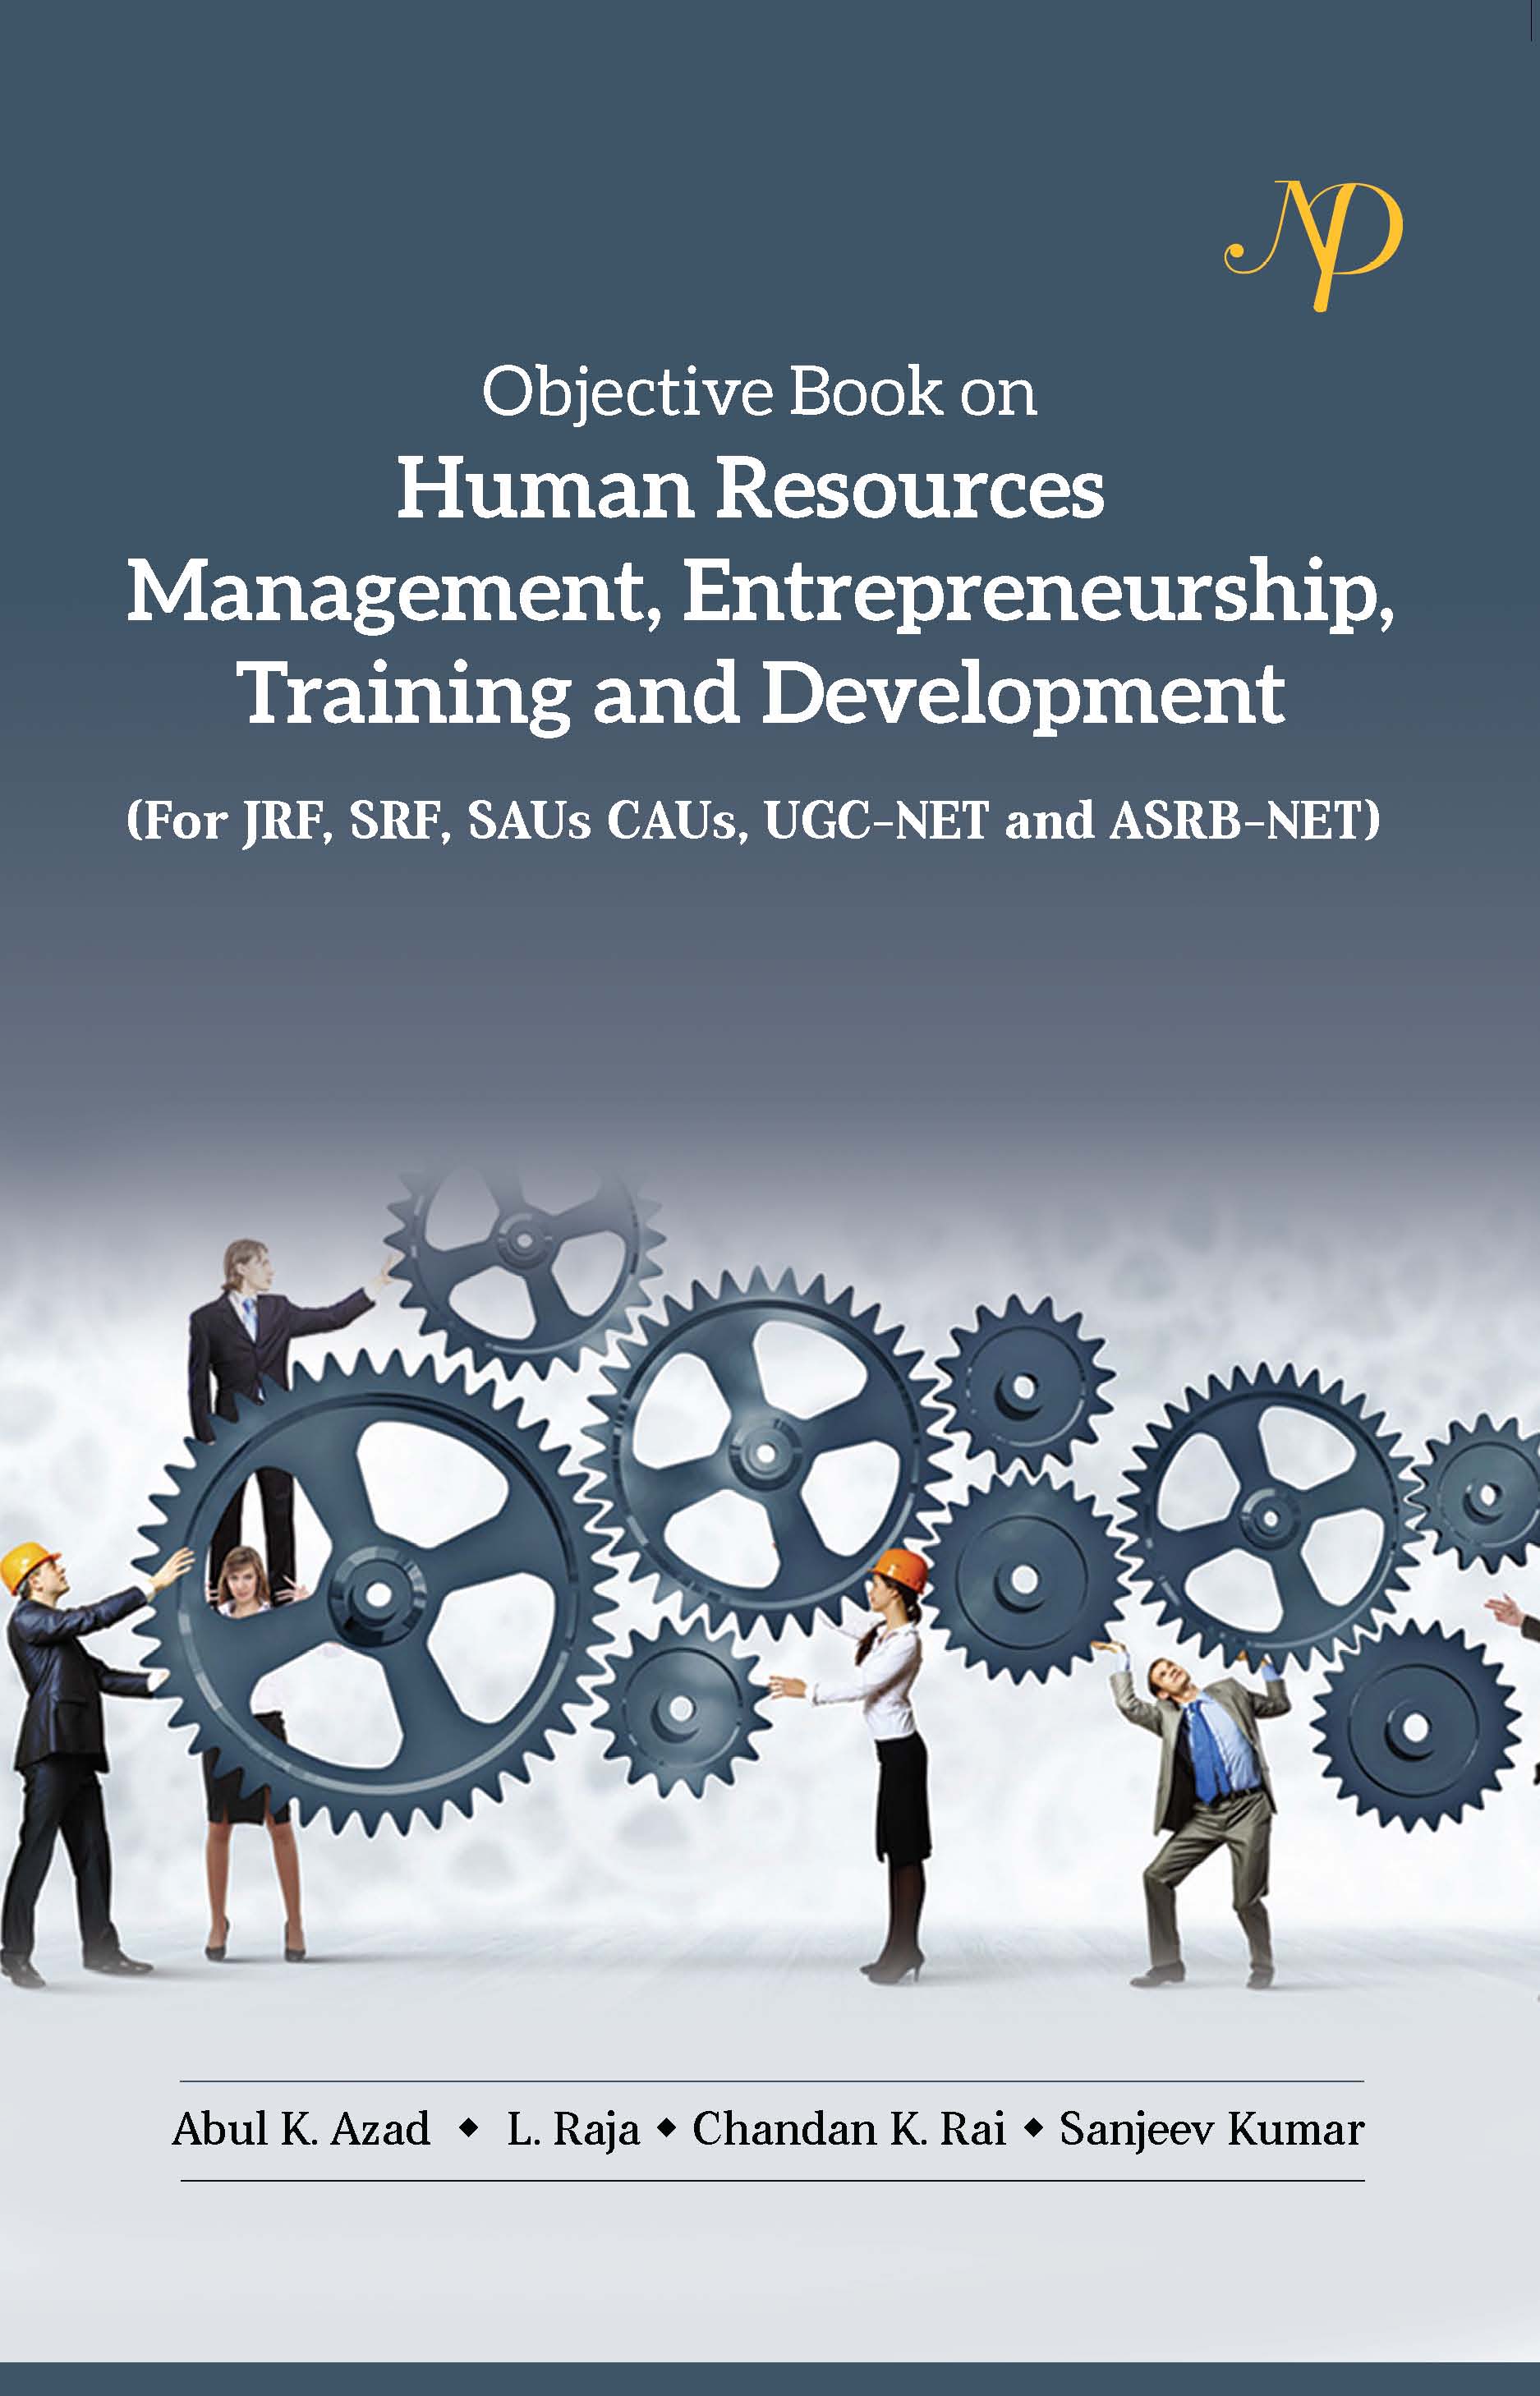 Human resources management - 2.jpg